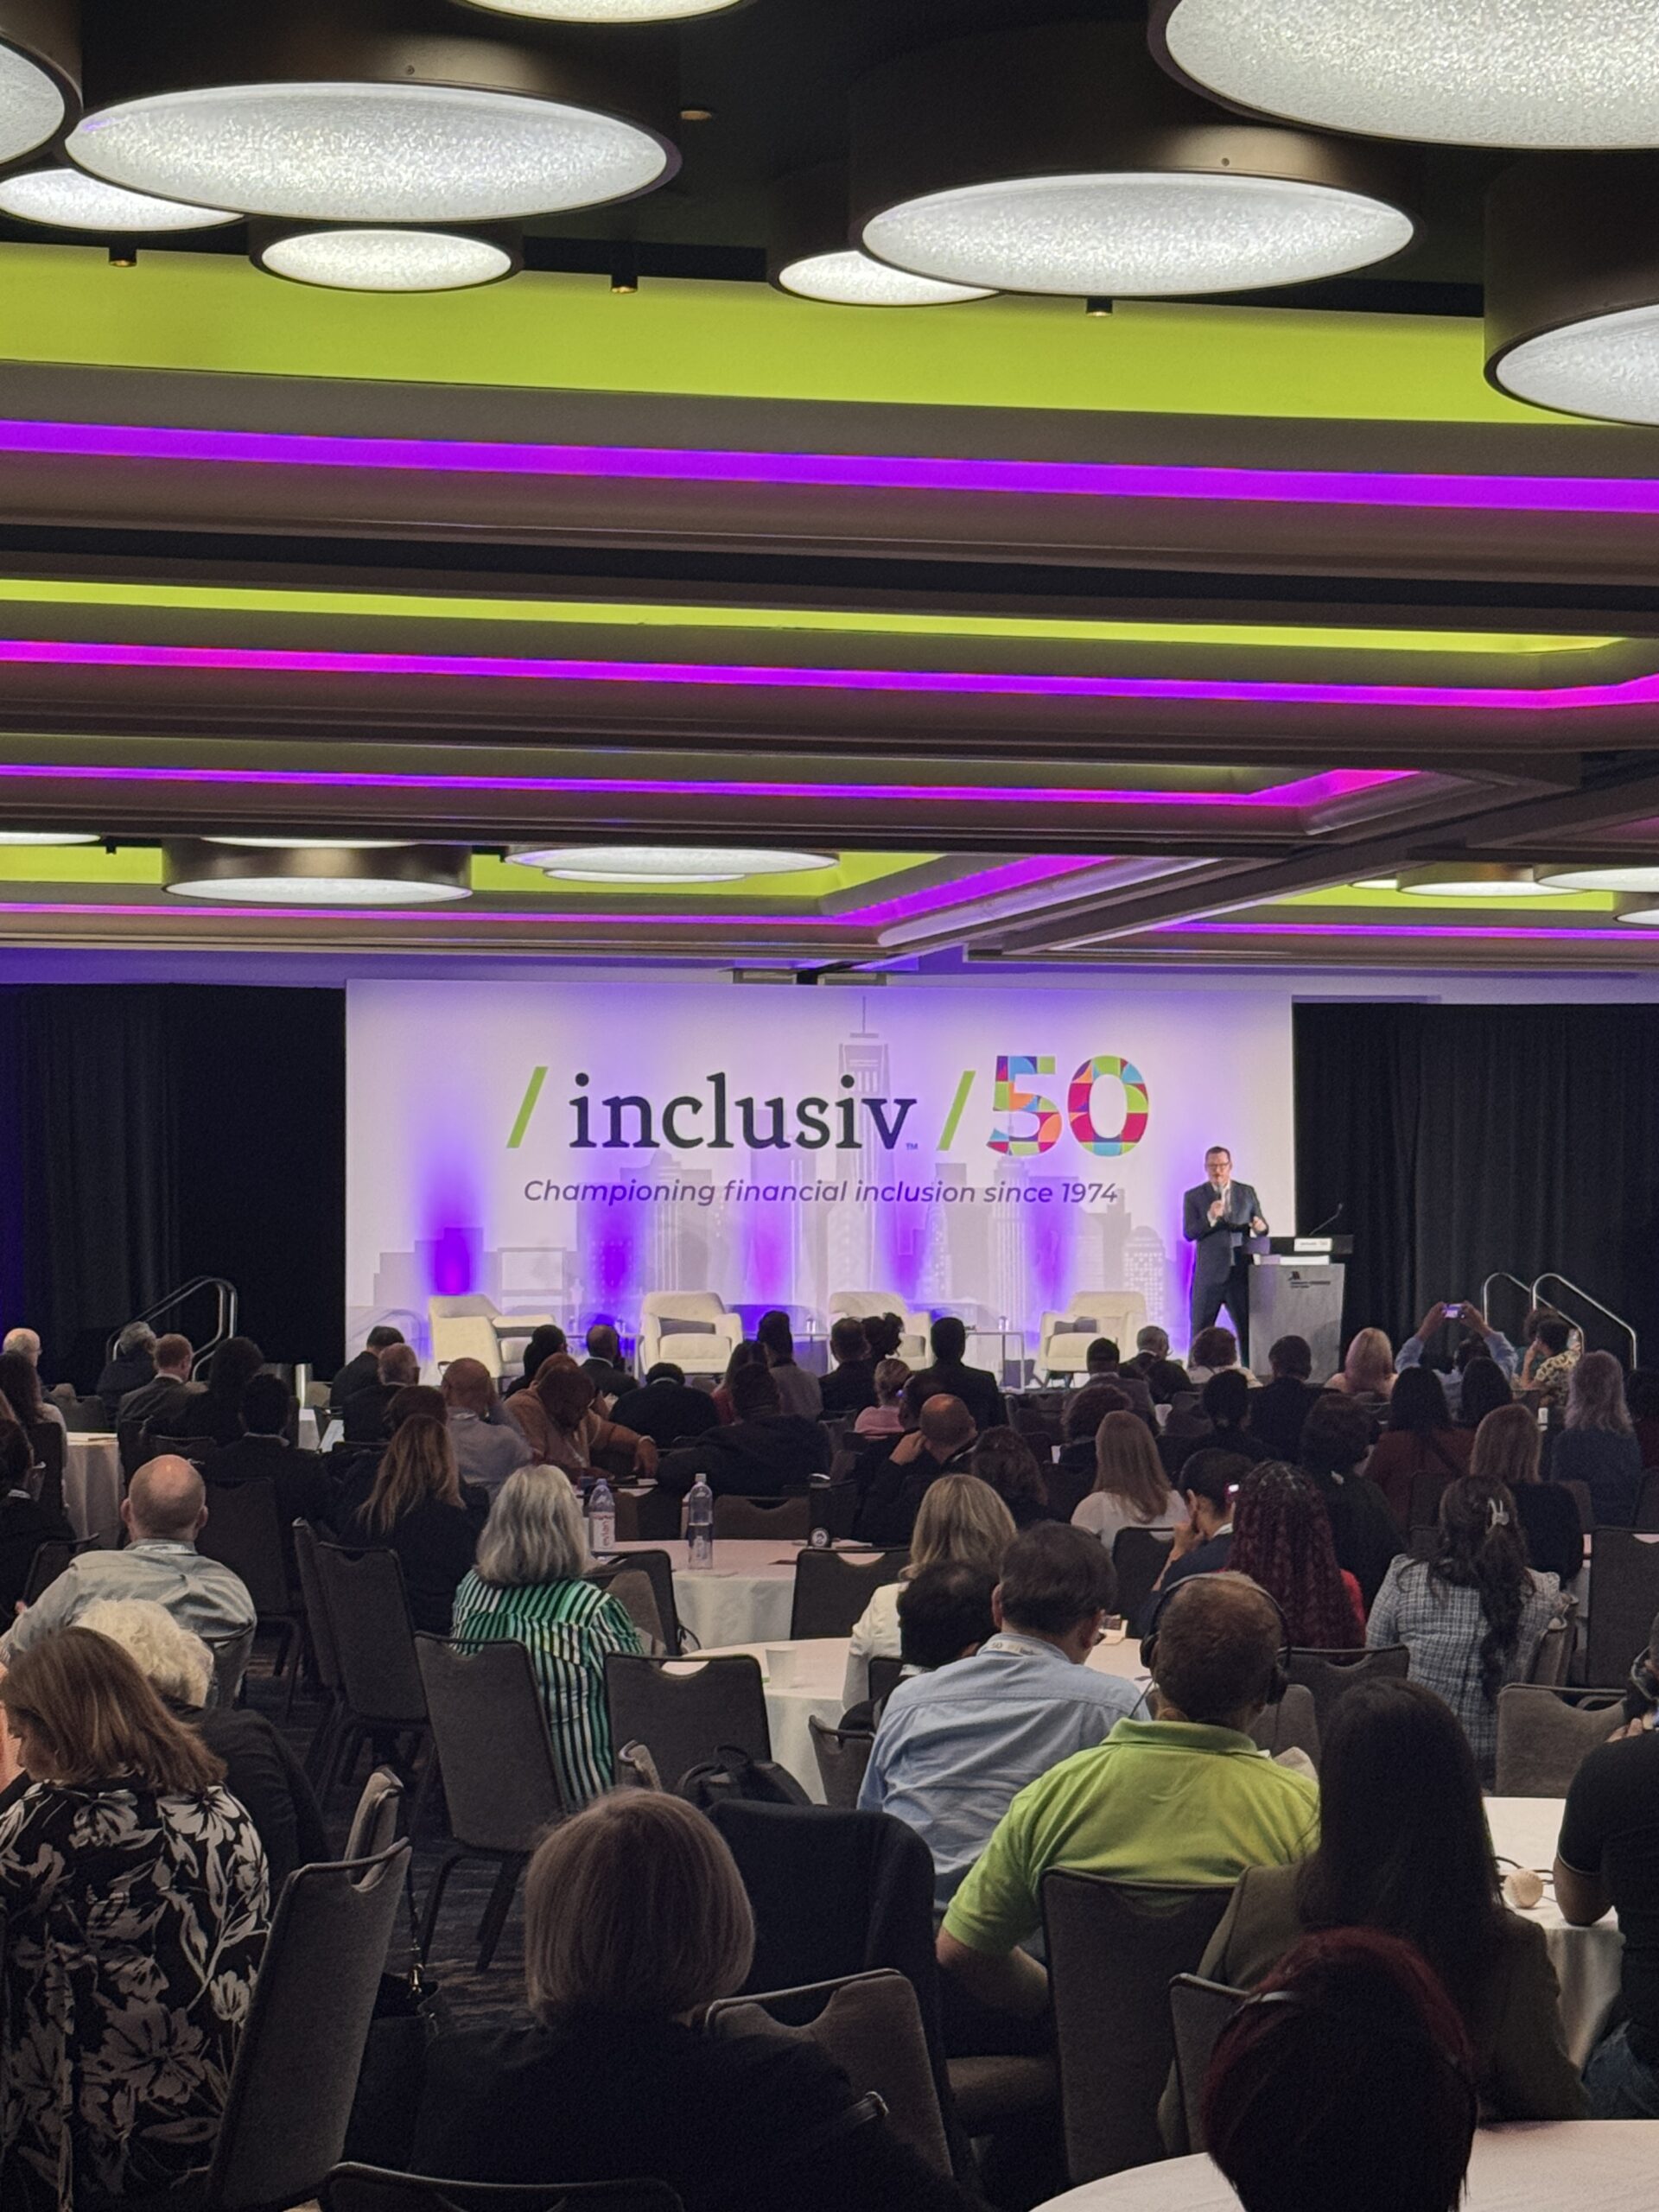 A Trip to Inclusive 50th Conference